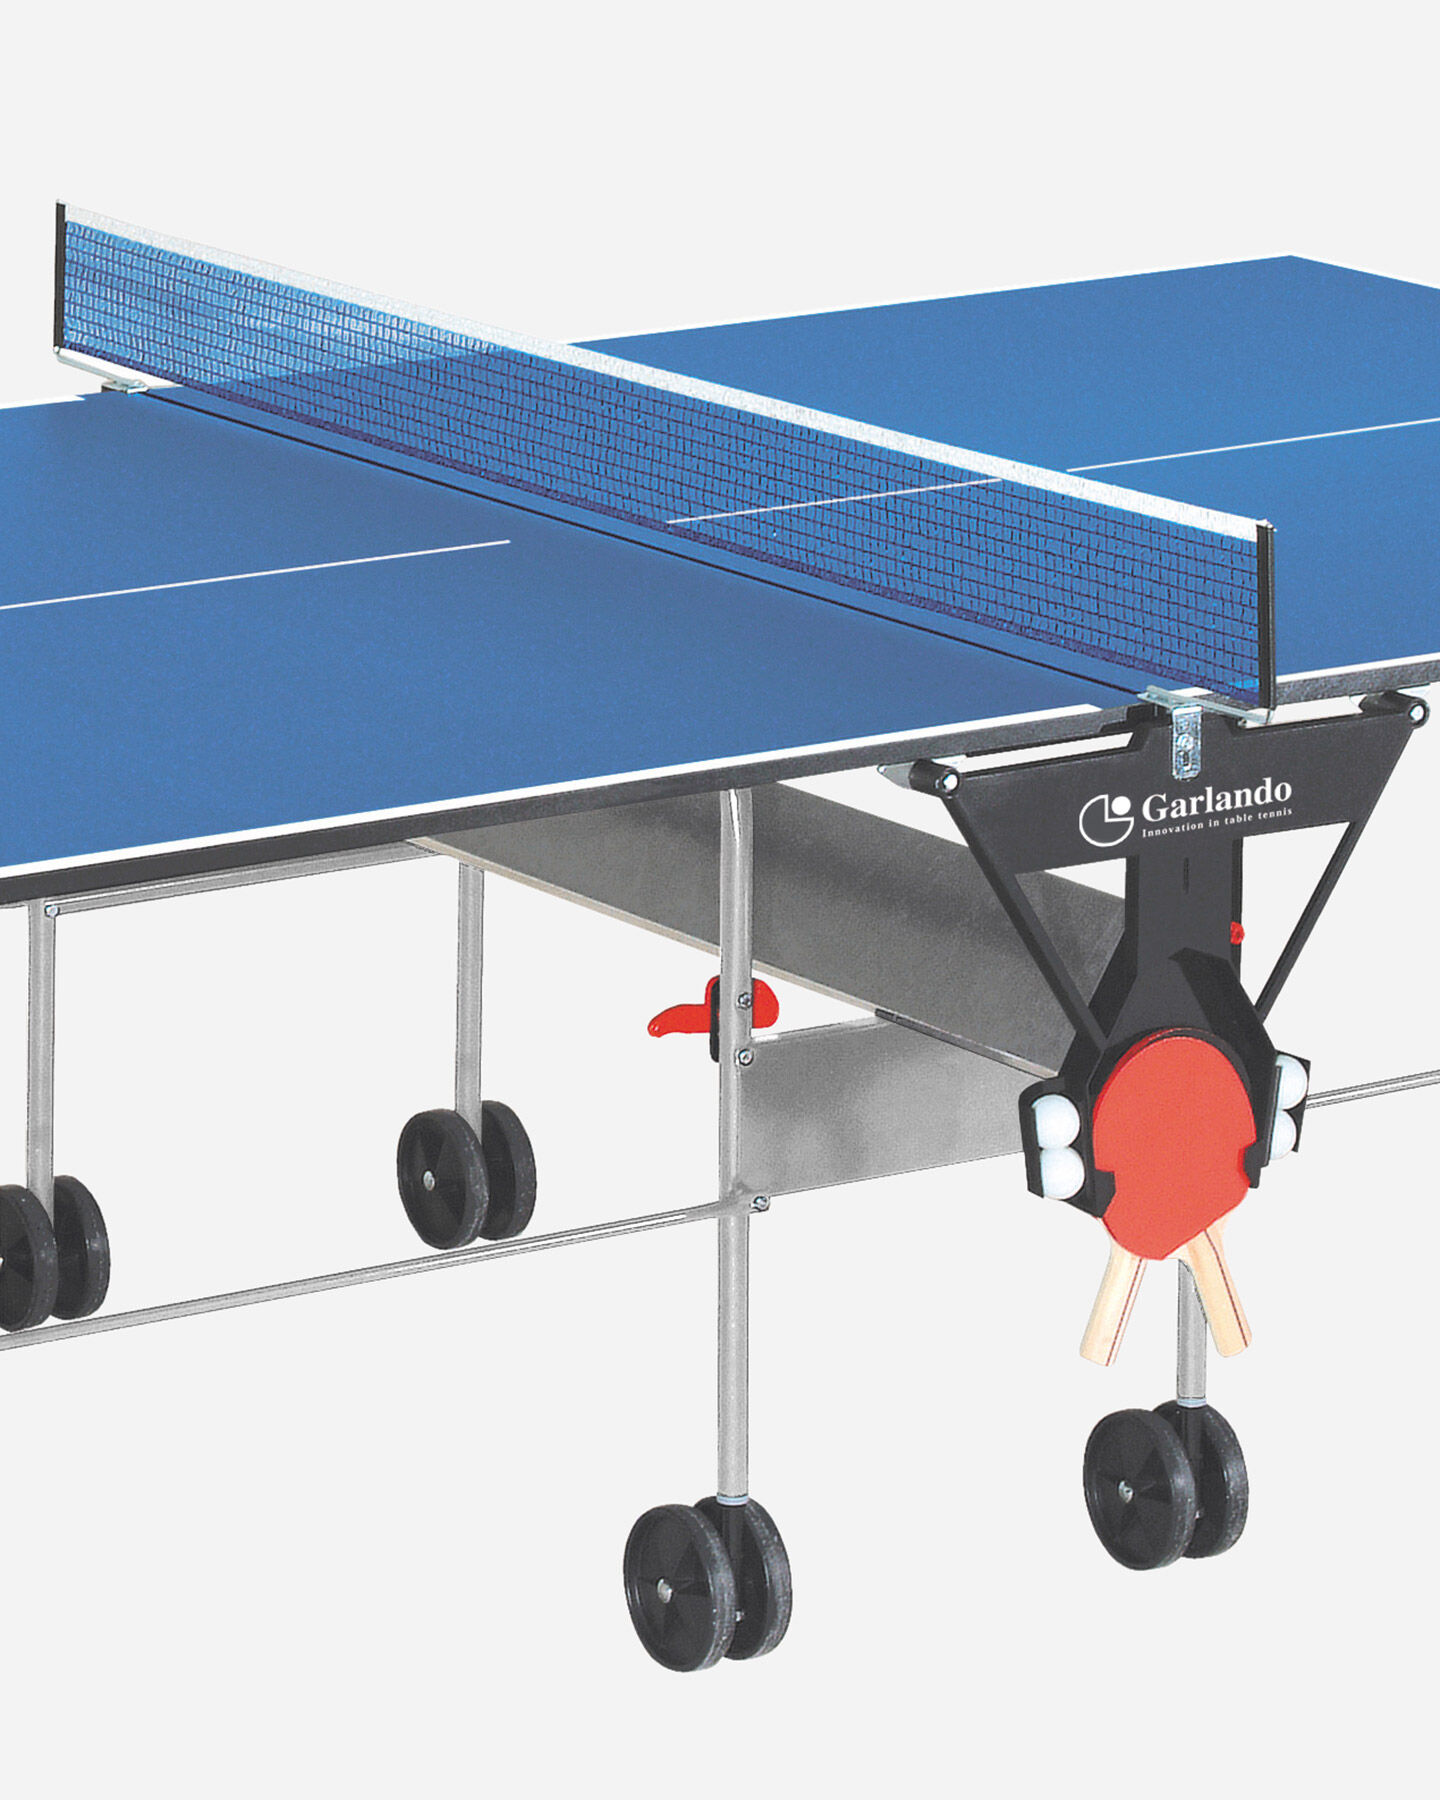  Tavolo ping pong GARLANDO TRAINING INDOOR S1251232|N.D.|UNI scatto 1